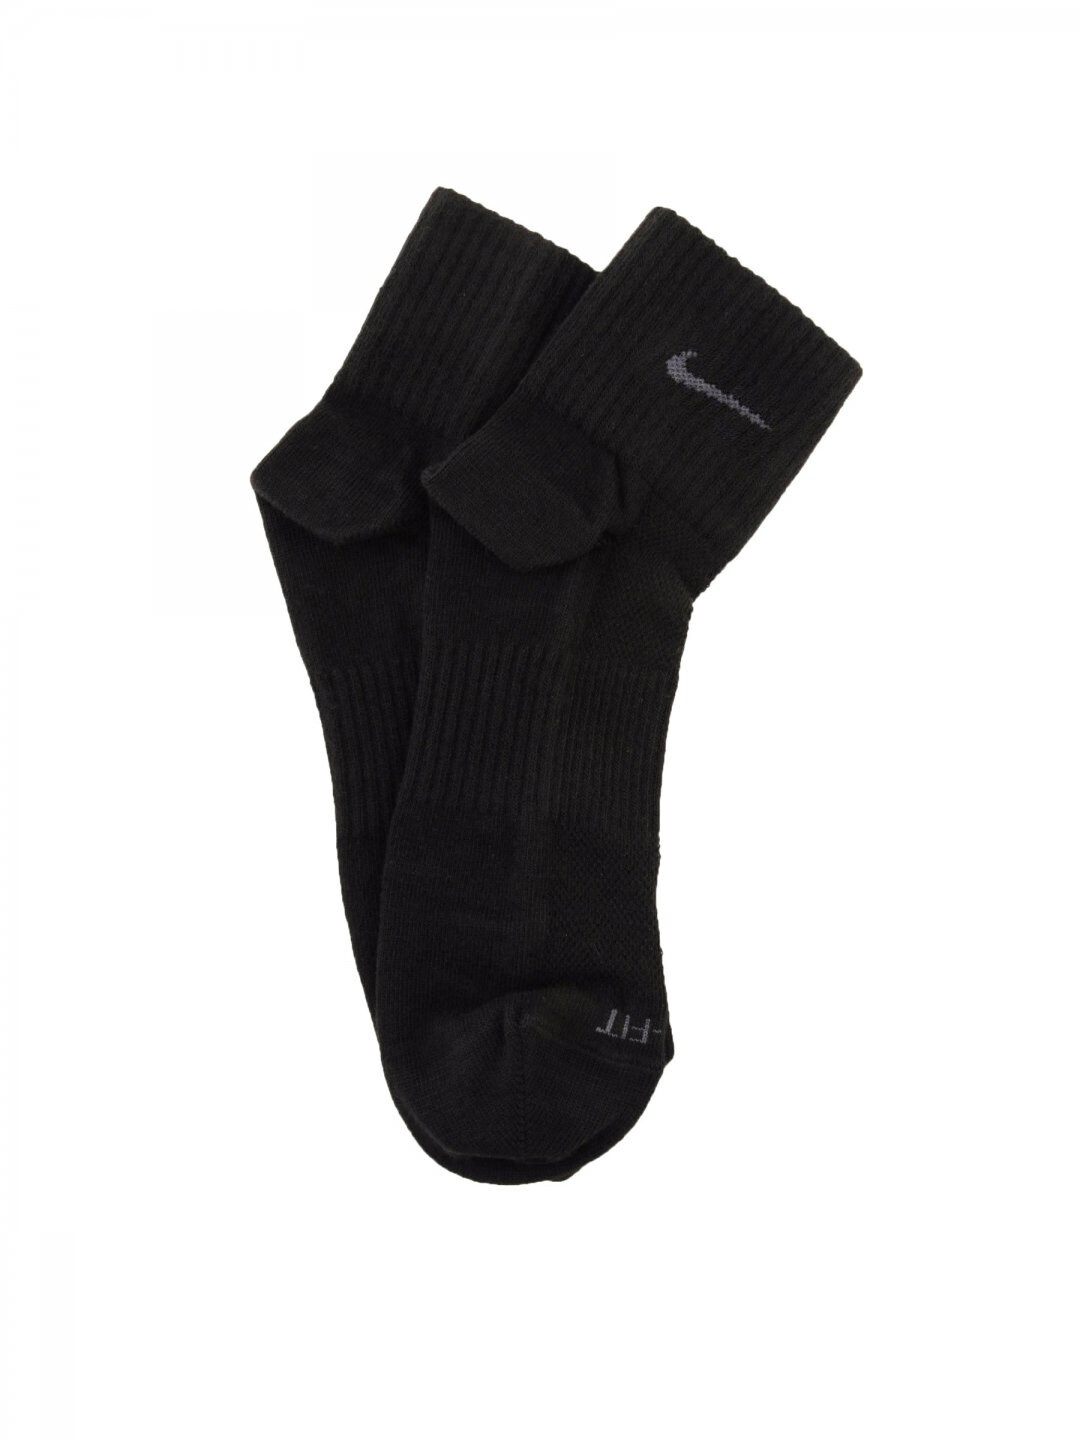 Nike Men Sports Black Socks